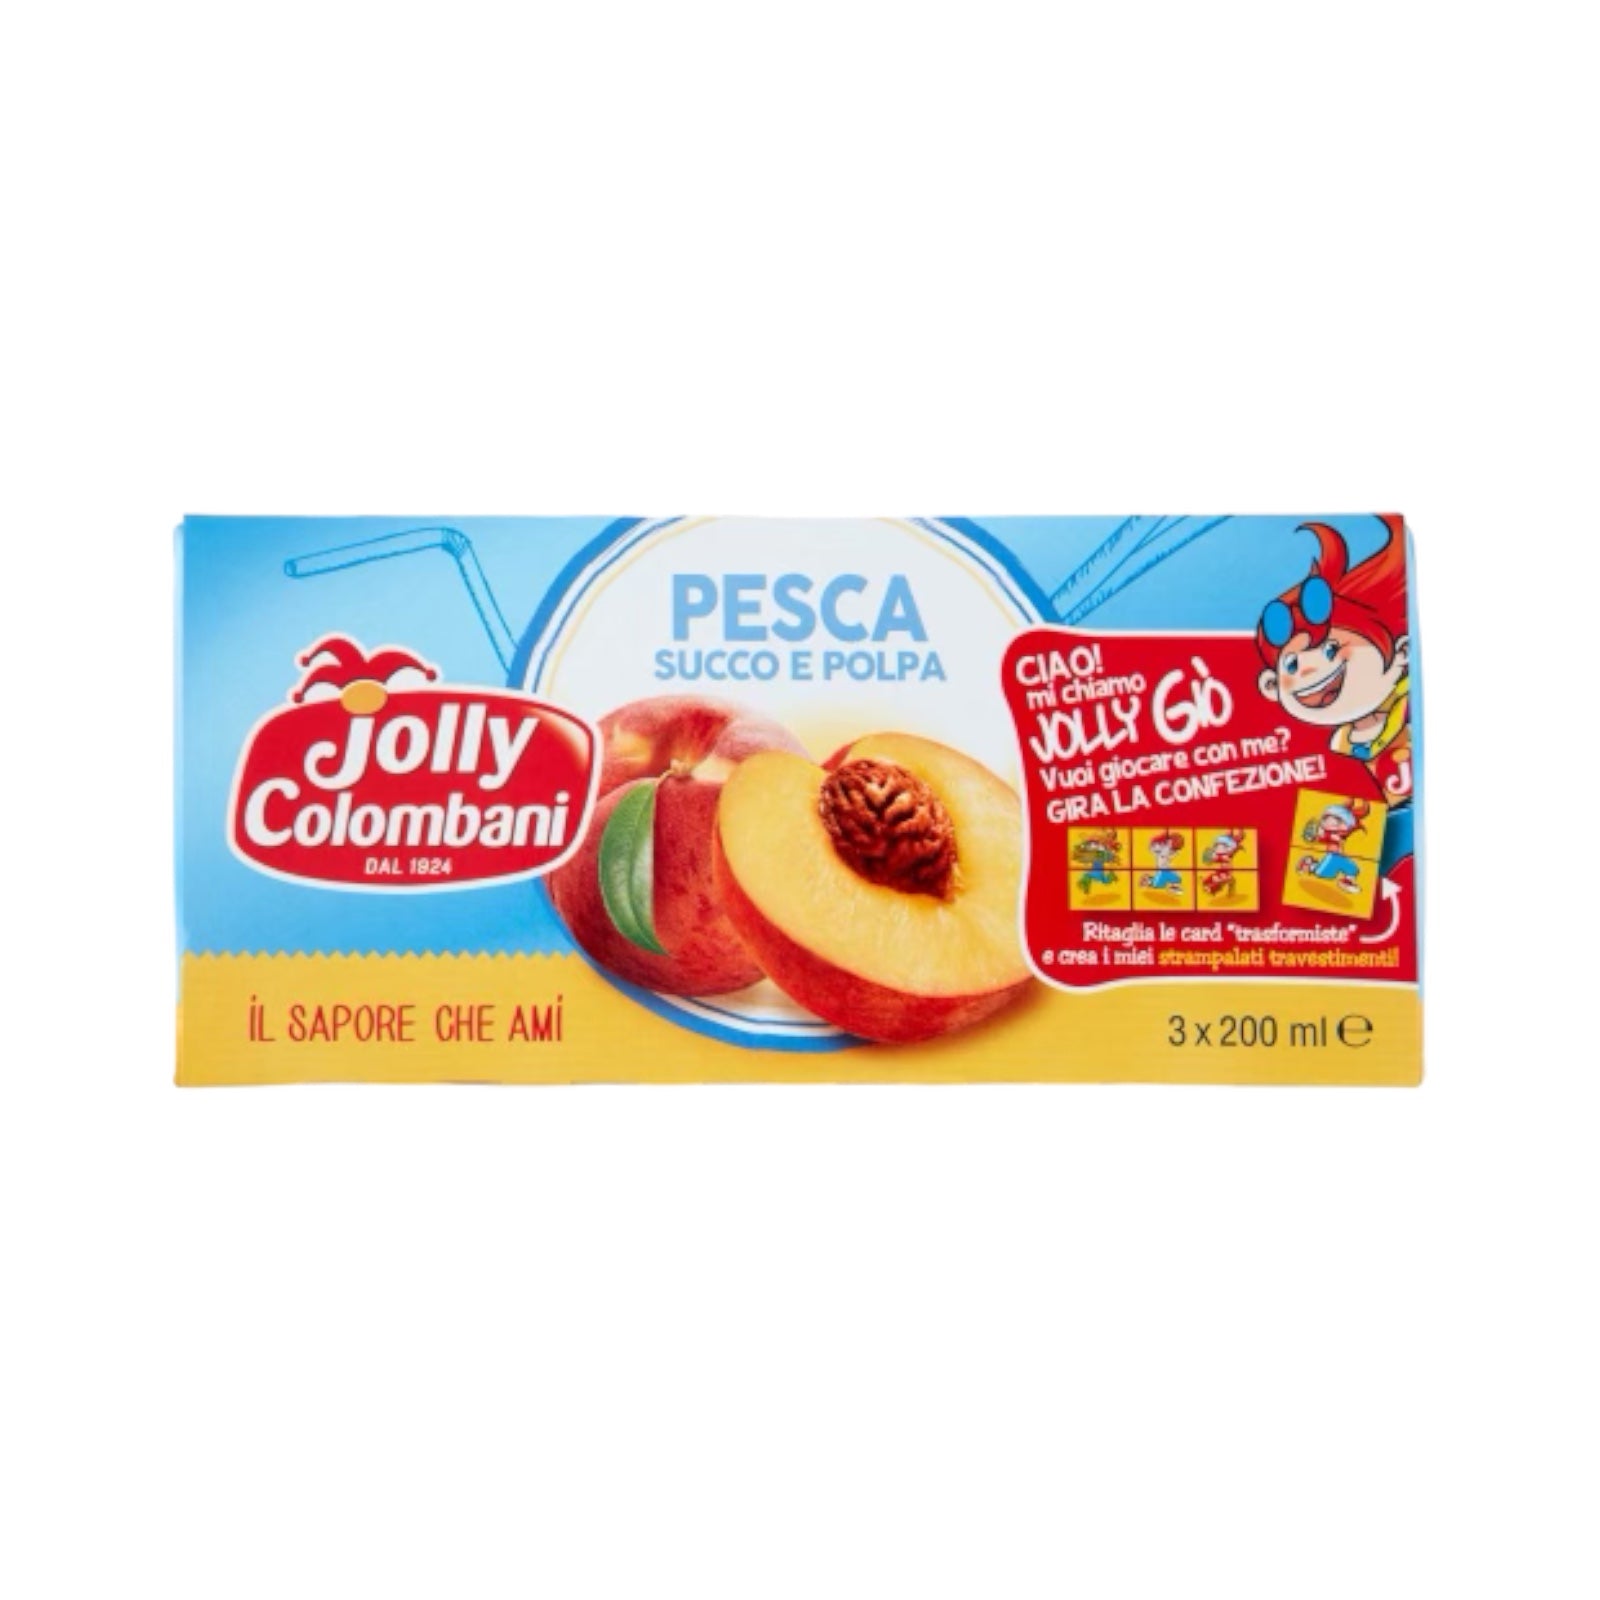 Jolly Colombani Peach Juice 3x200ml